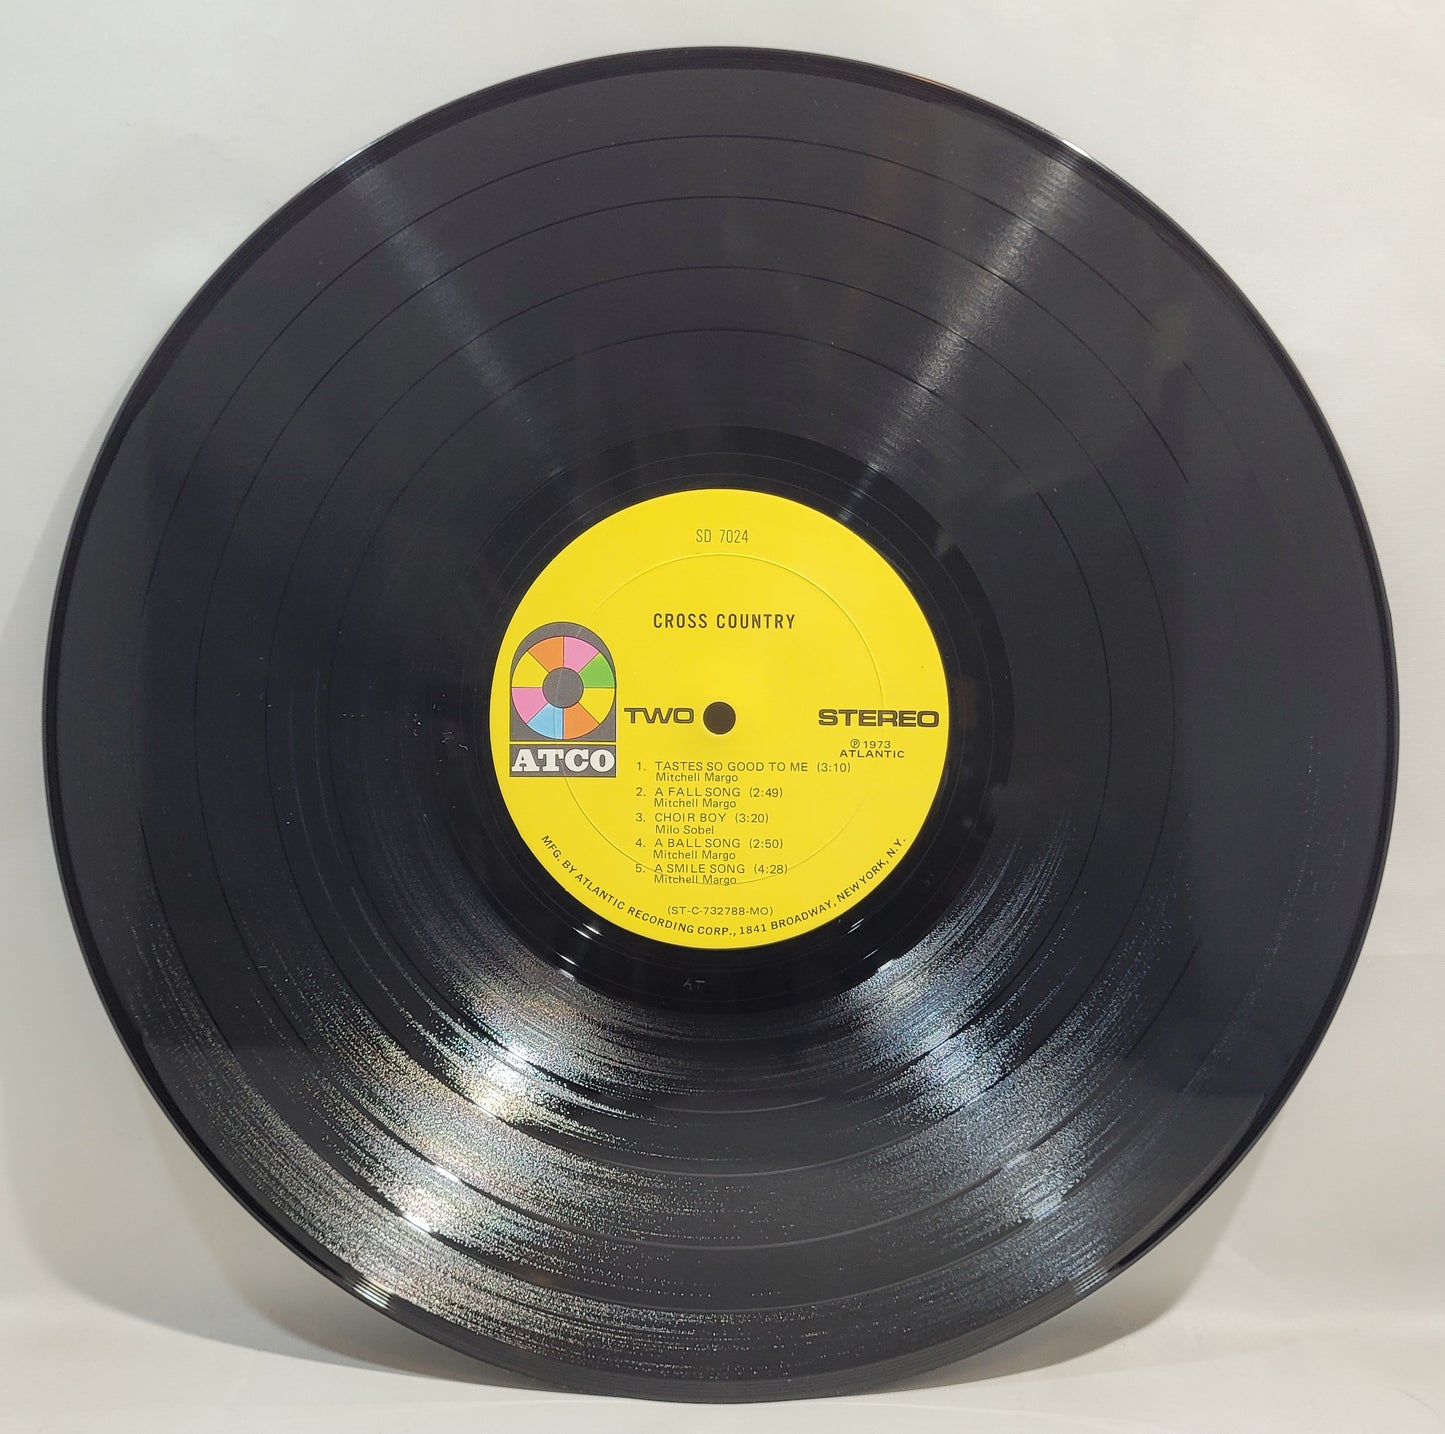 Cross Country - Cross Country [Vinyl Record LP]